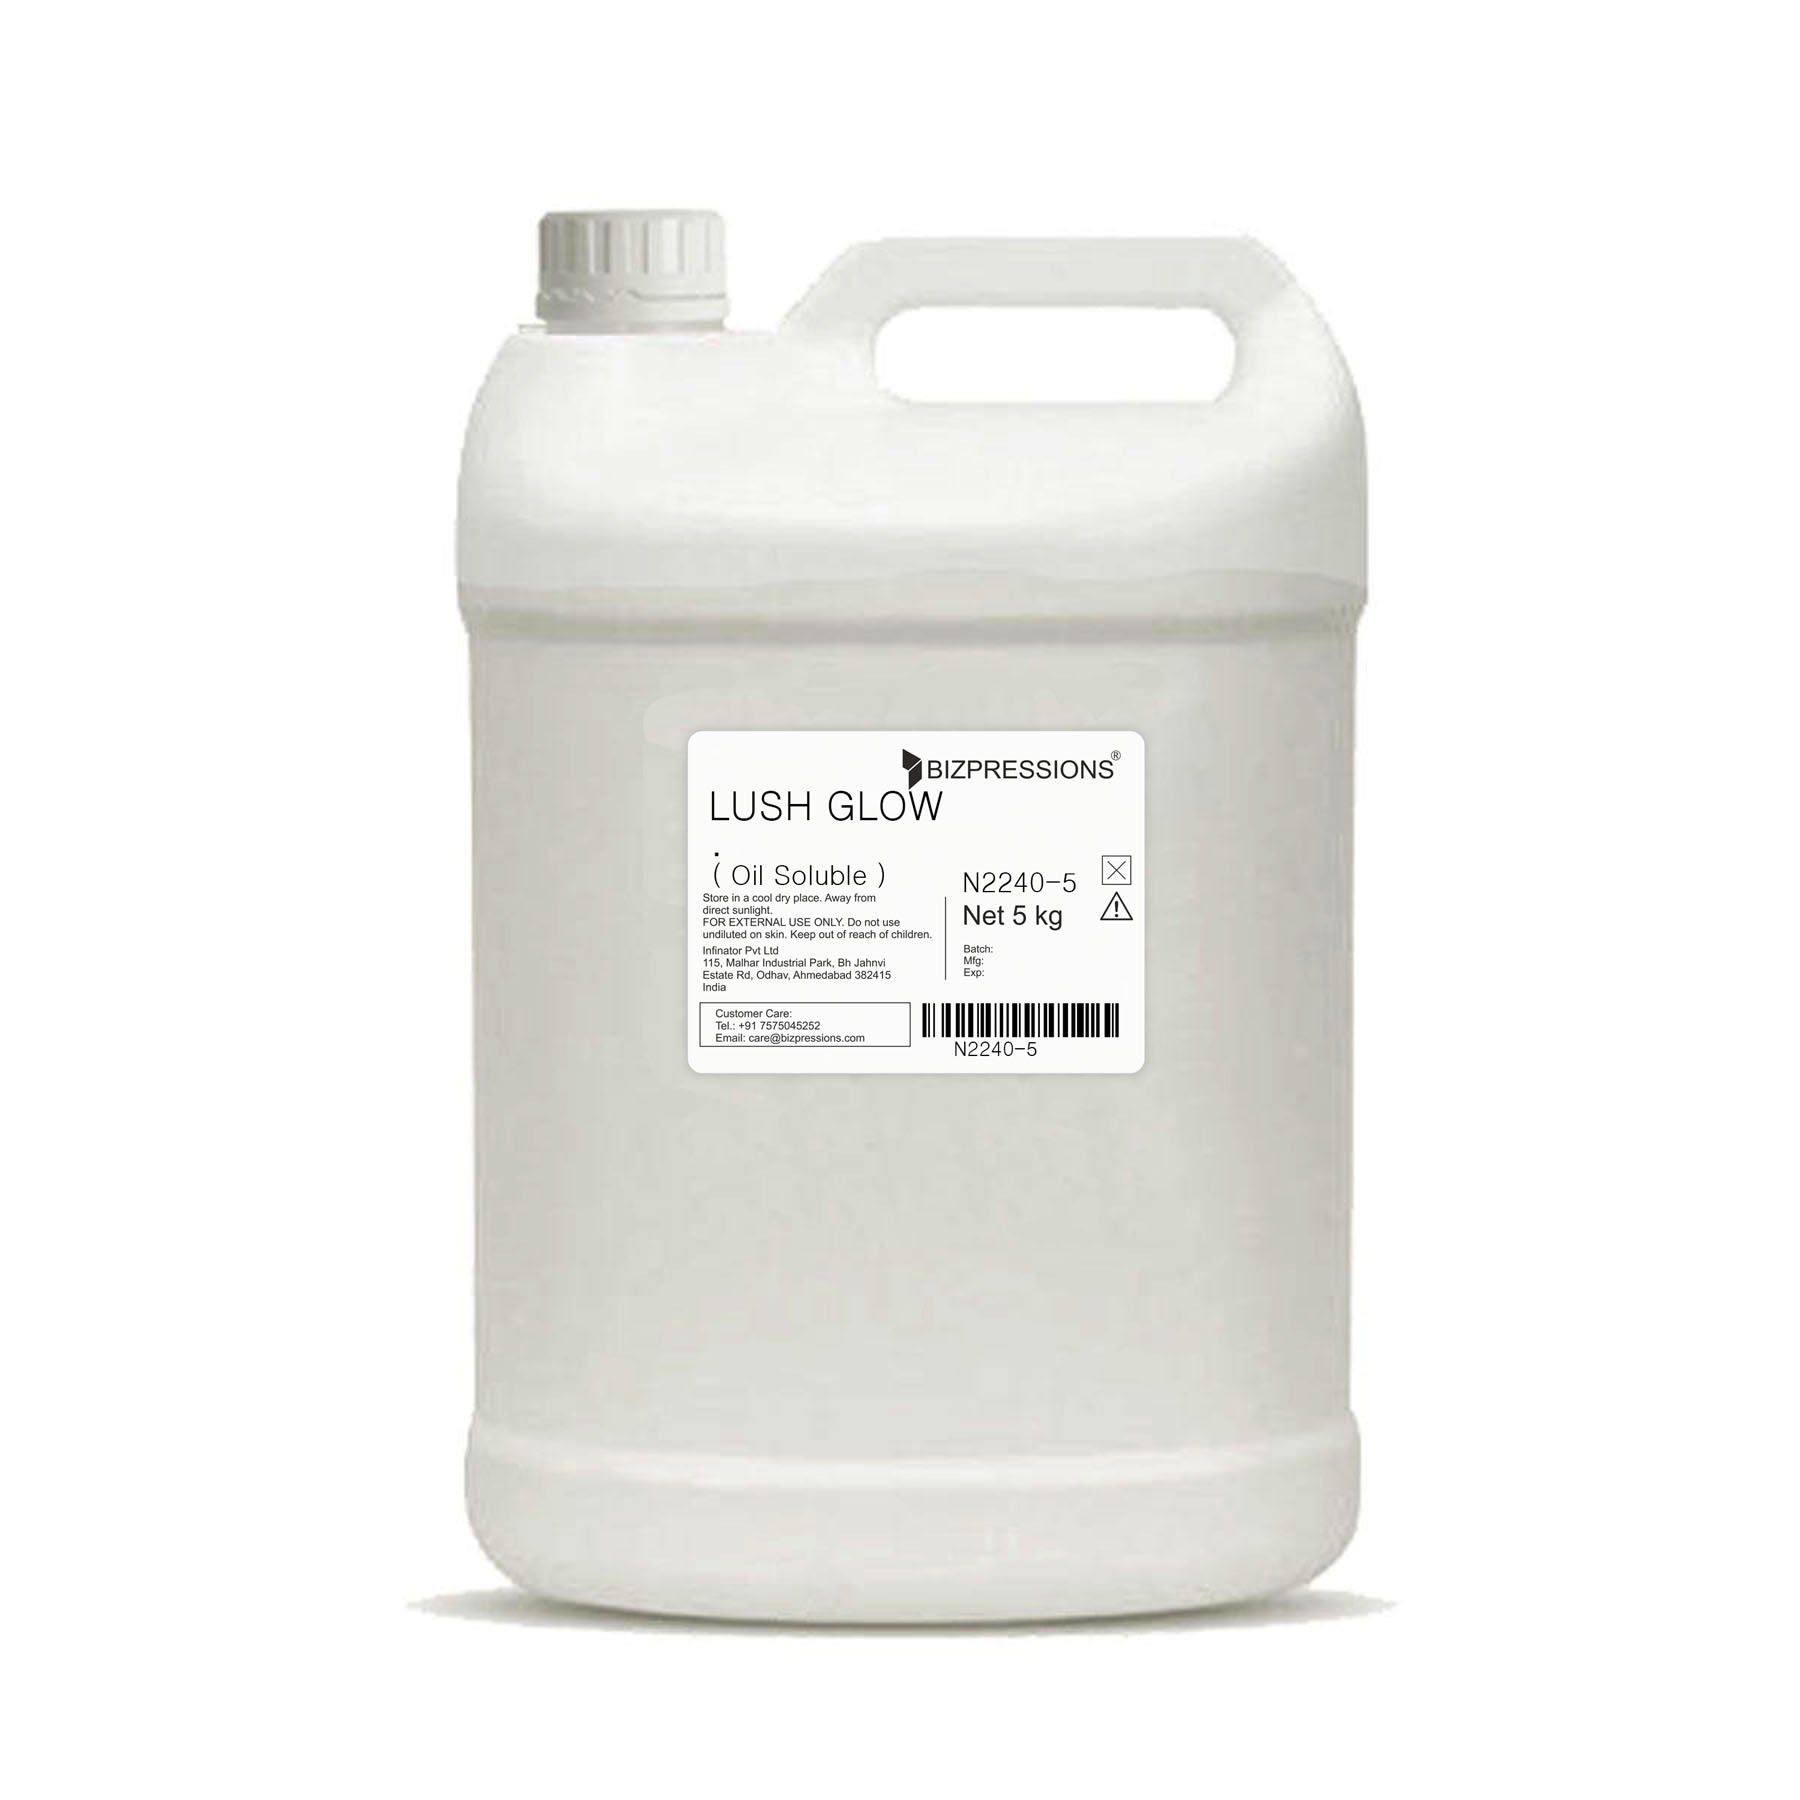 LUSH GLOW - Fragrance ( Oil Soluble ) - 5 kg